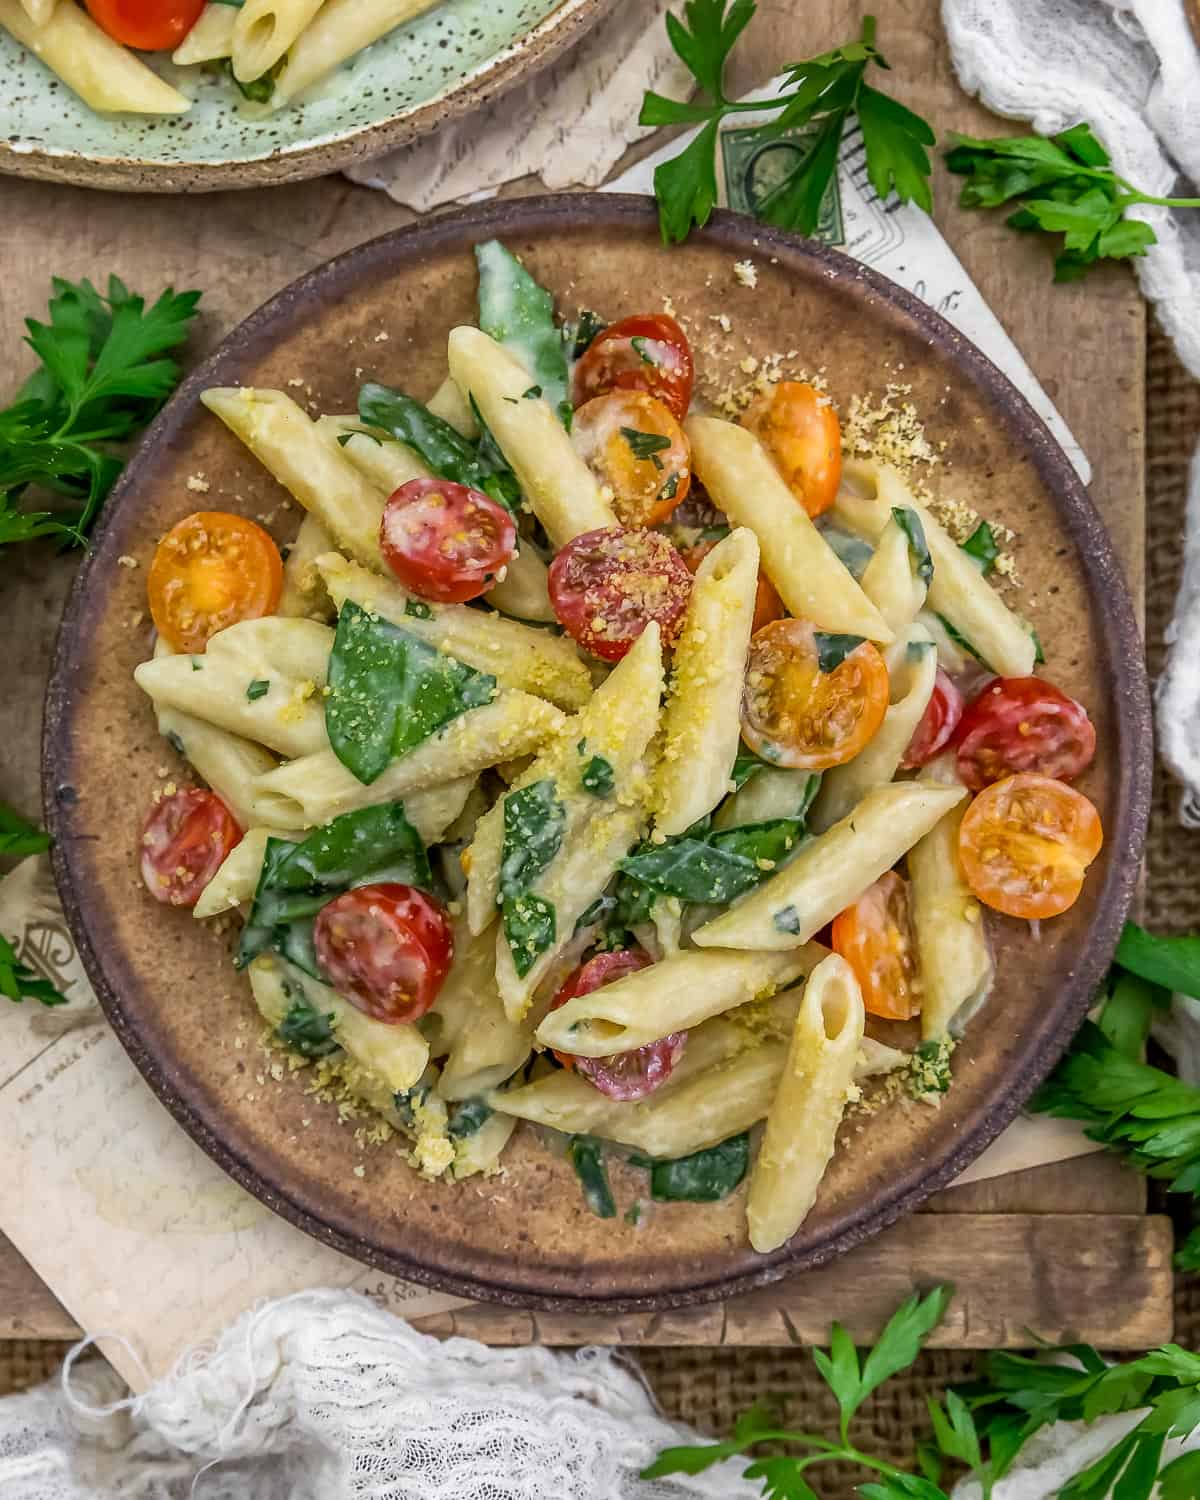 Plate of Easy Italian Hummus Pasta